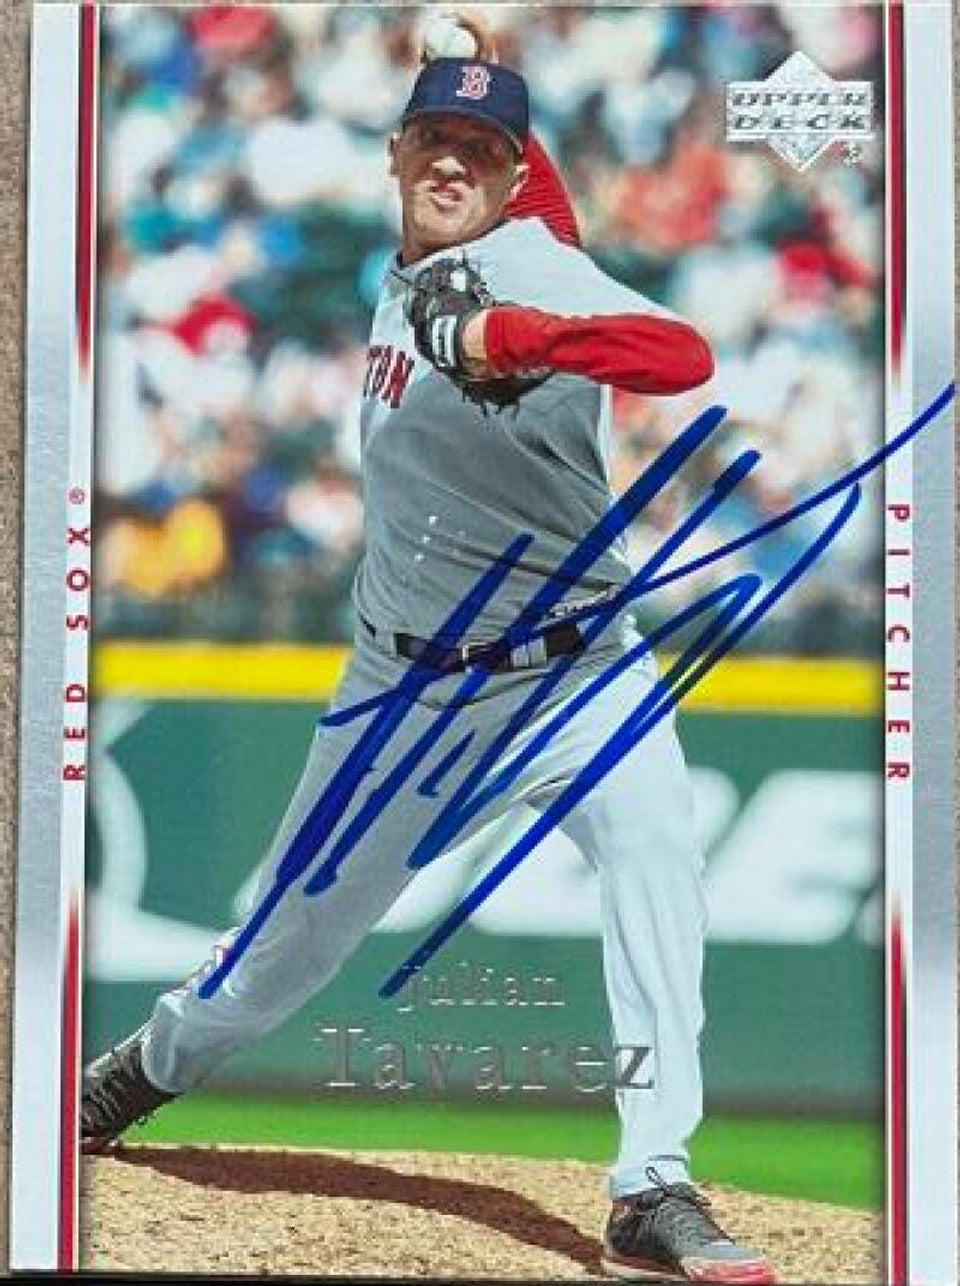 Julian Tavarez Signed 2007 Upper Deck Baseball Card - Boston Red Sox